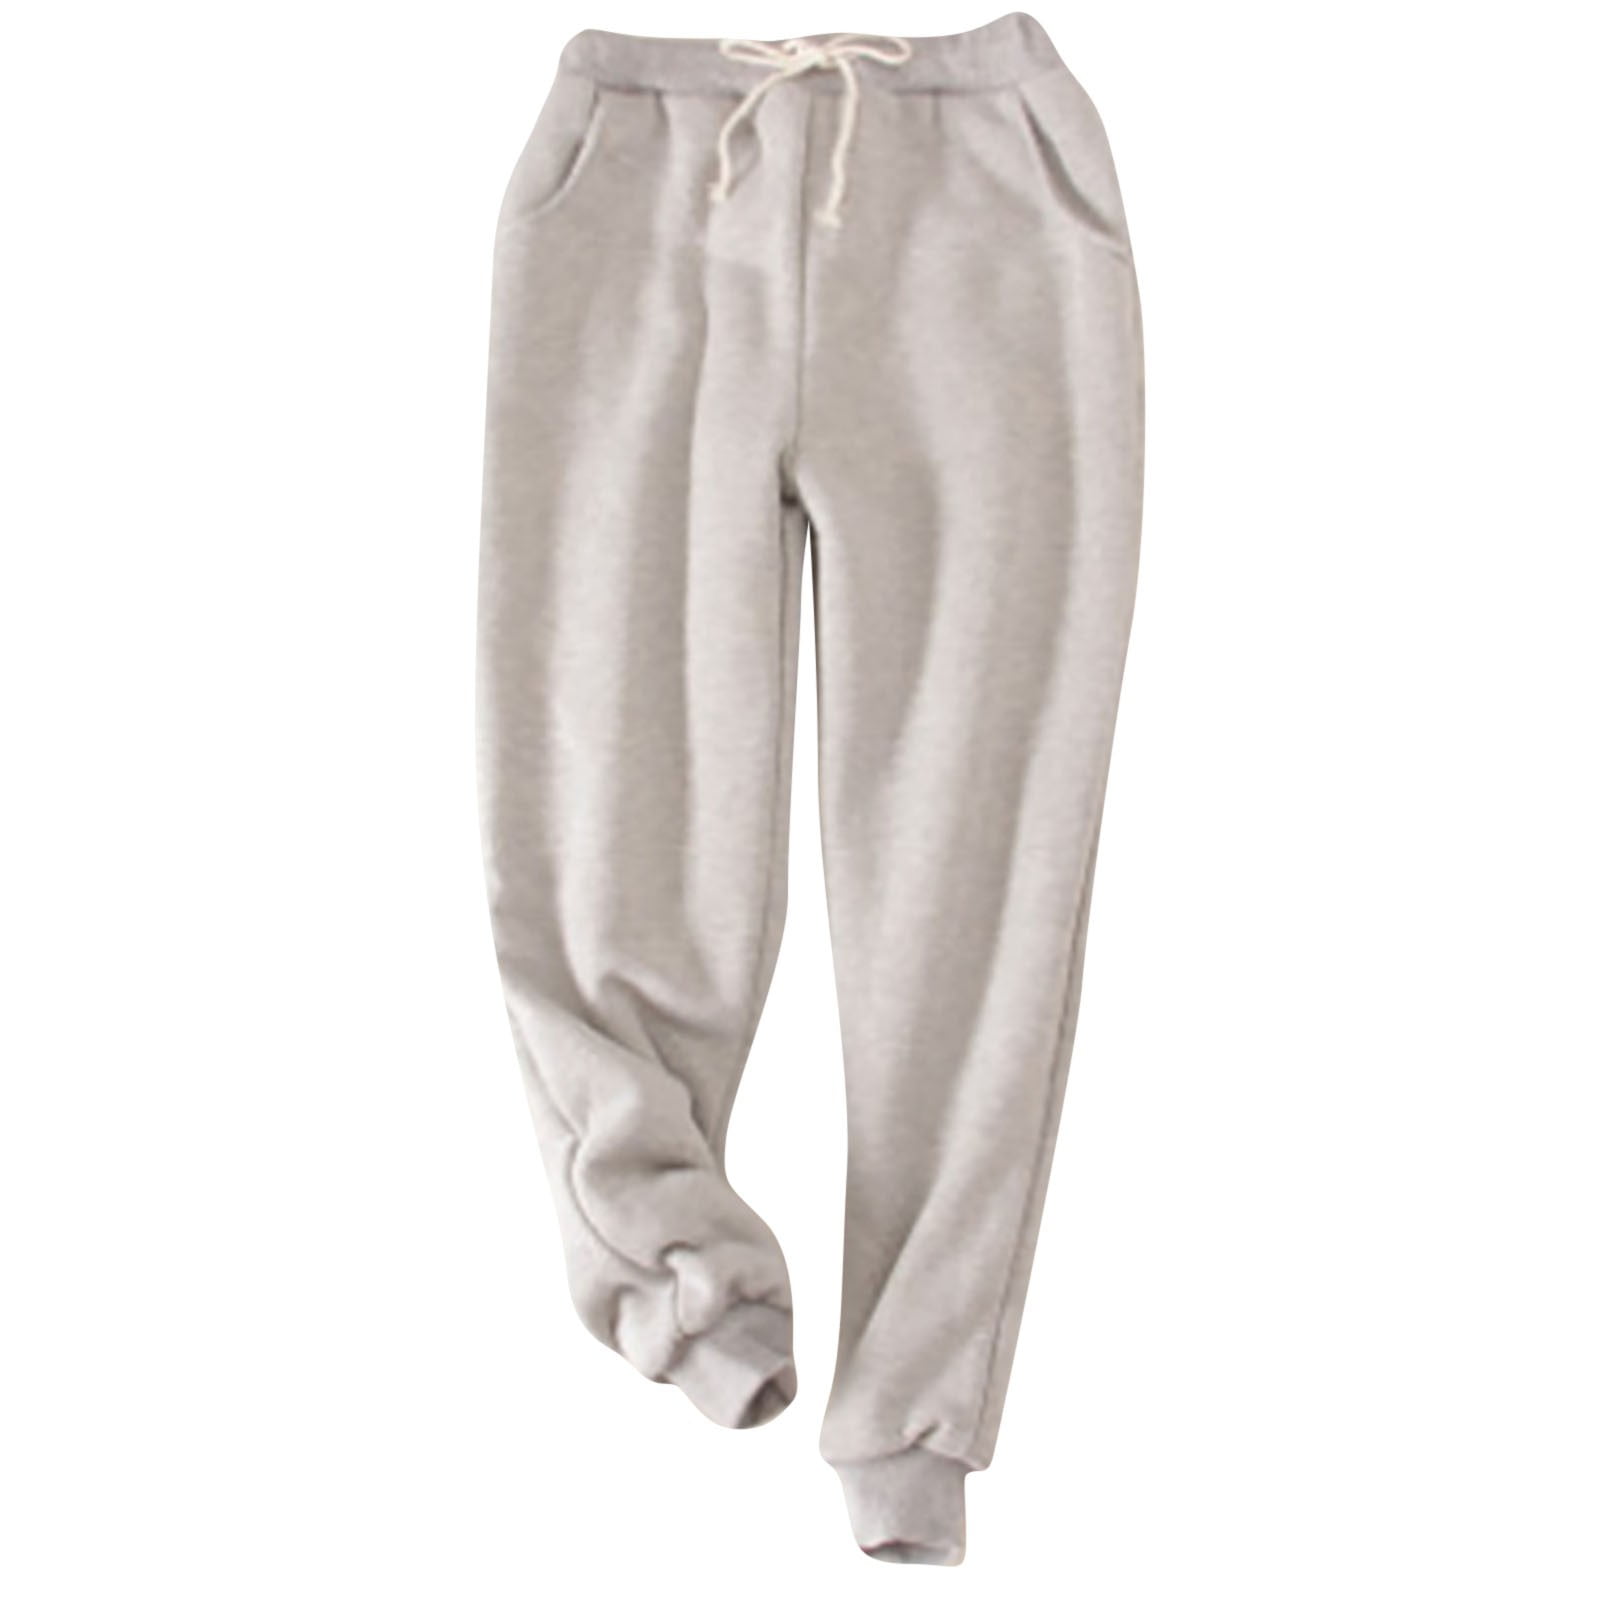 Winters Fleece Lined Warm Sweatpants at Rs 850.00, Fleece Pants